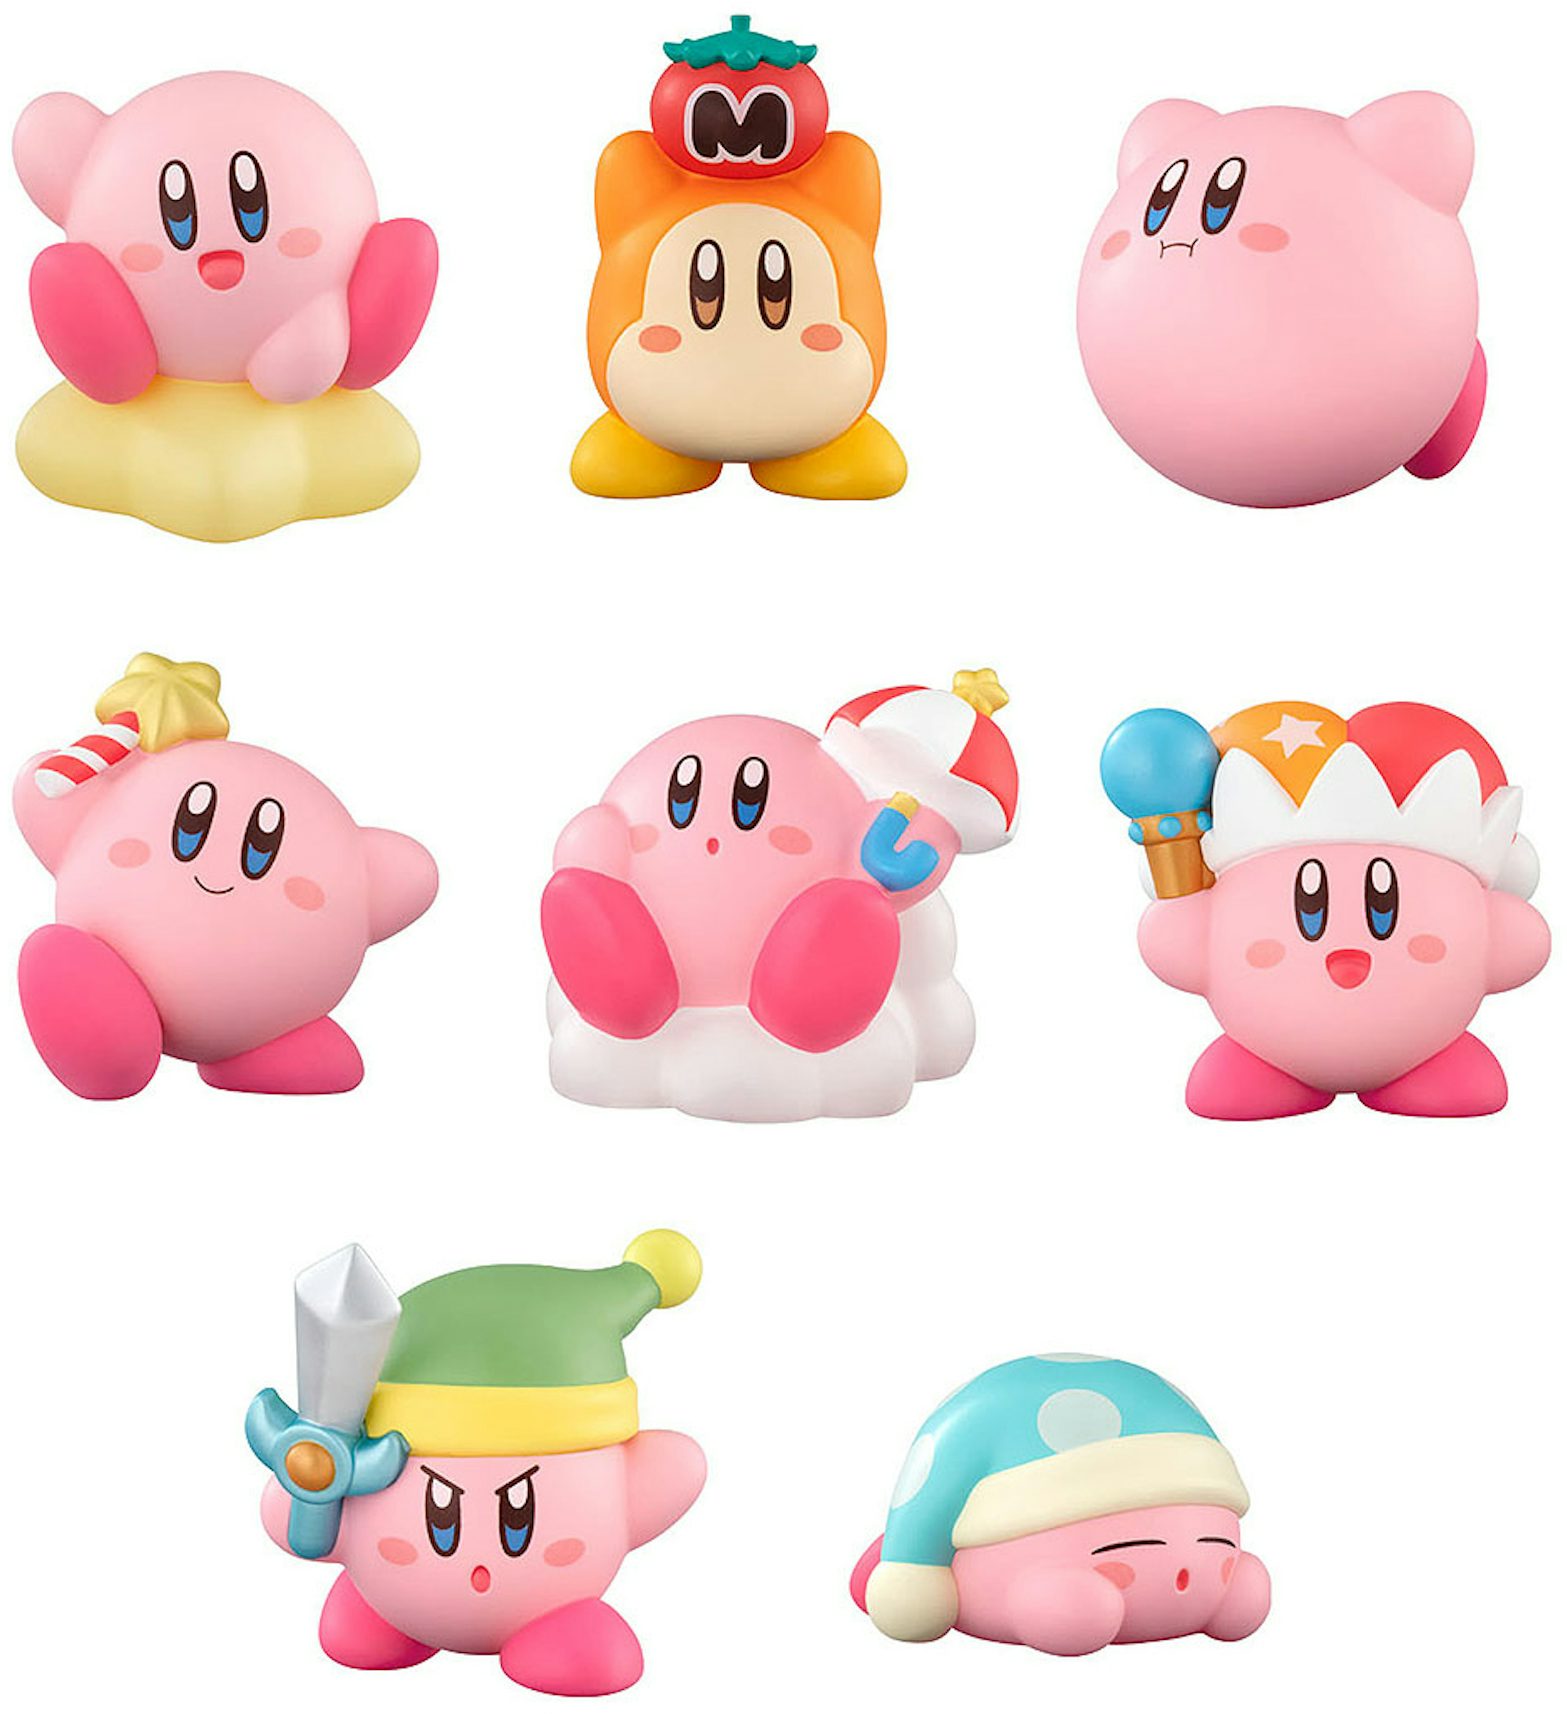 https://images.stockx.com/images/Bandai-Shokugan-Kirbys-Dream-Land-Kirby-Friends-Set-of-12-Action-Figures-Pink.jpg?fit=fill&bg=FFFFFF&w=1200&h=857&fm=jpg&auto=compress&dpr=2&trim=color&updated_at=1633449963&q=60